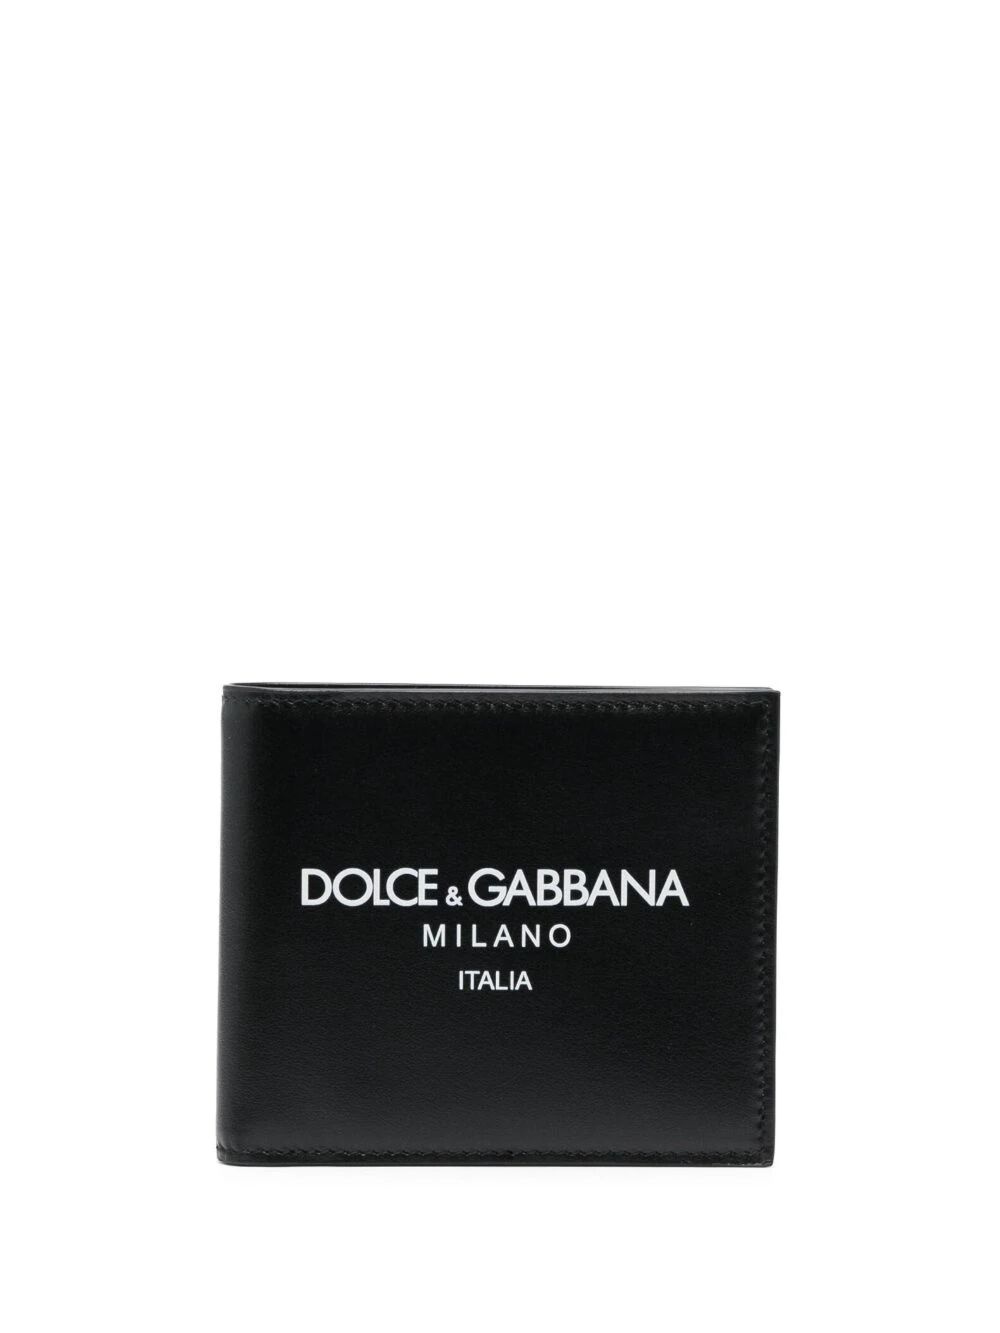 Dolce&gabbana milano wallet - 1